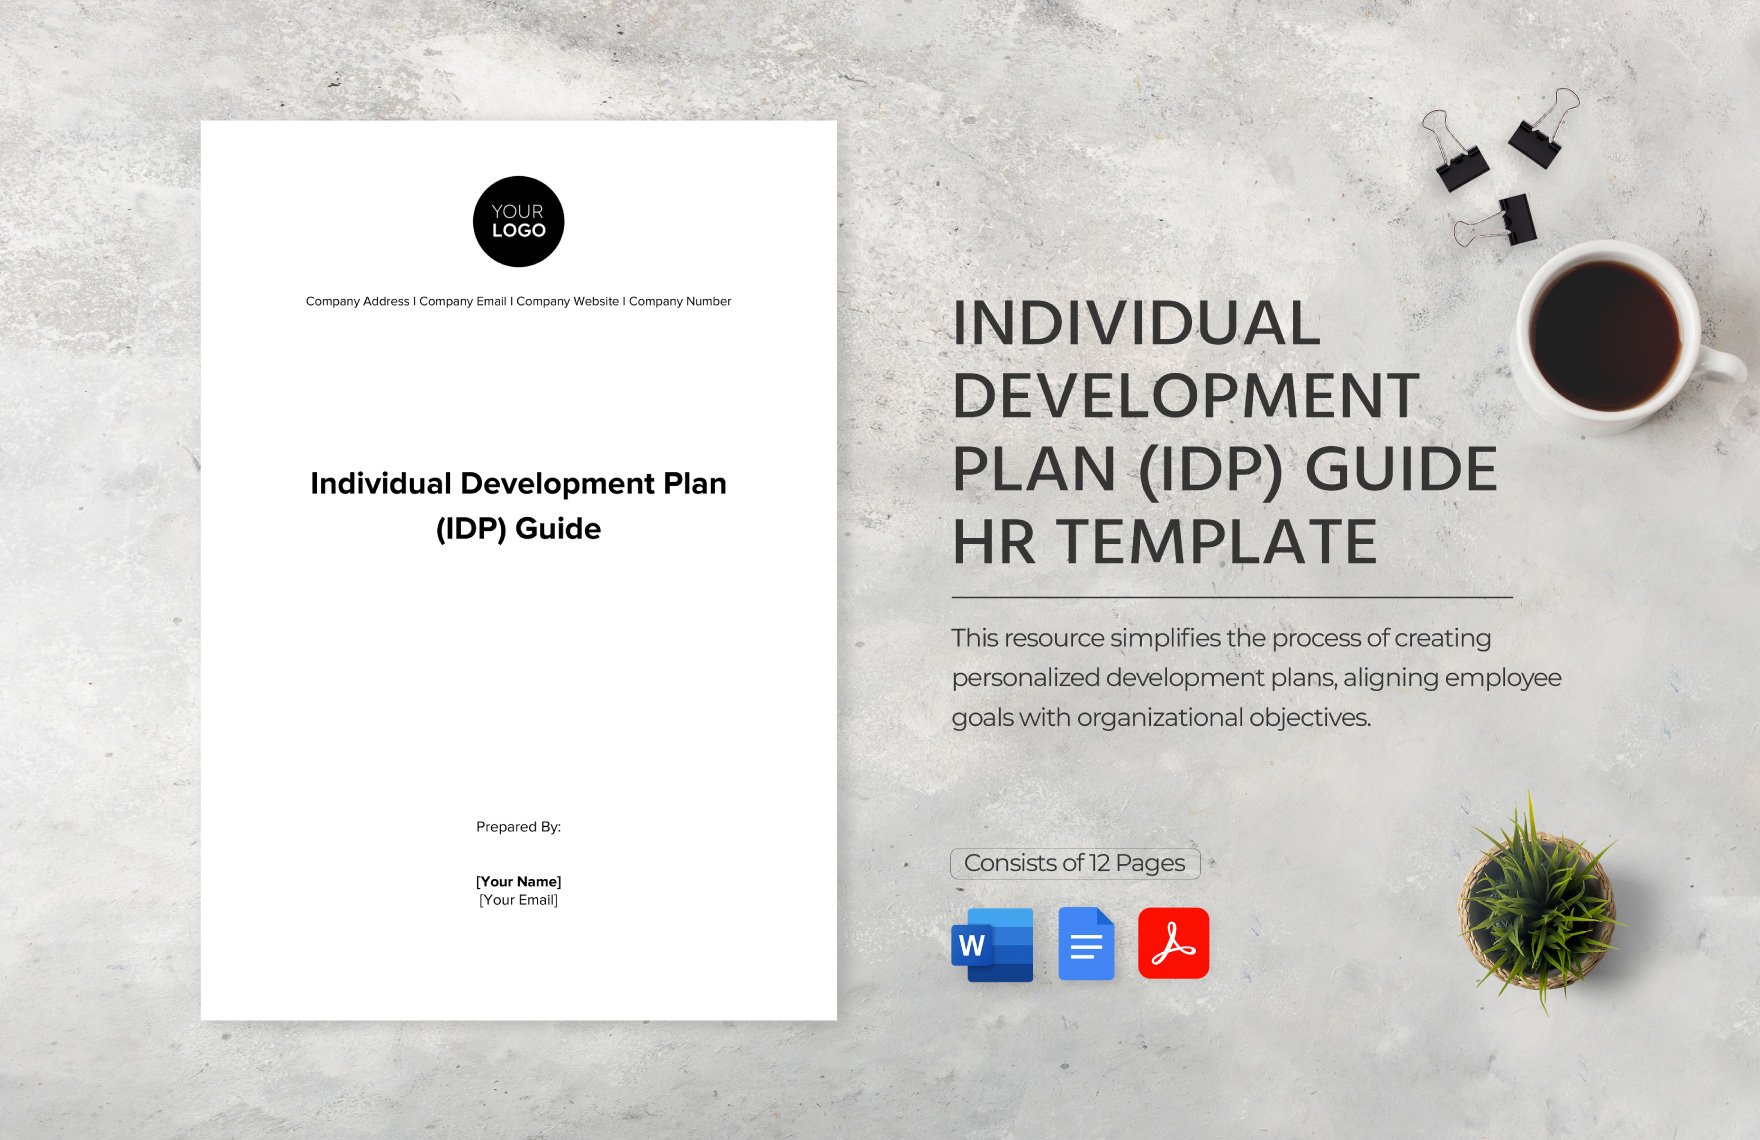 Individual Development Plan (IDP) Guide HR Template